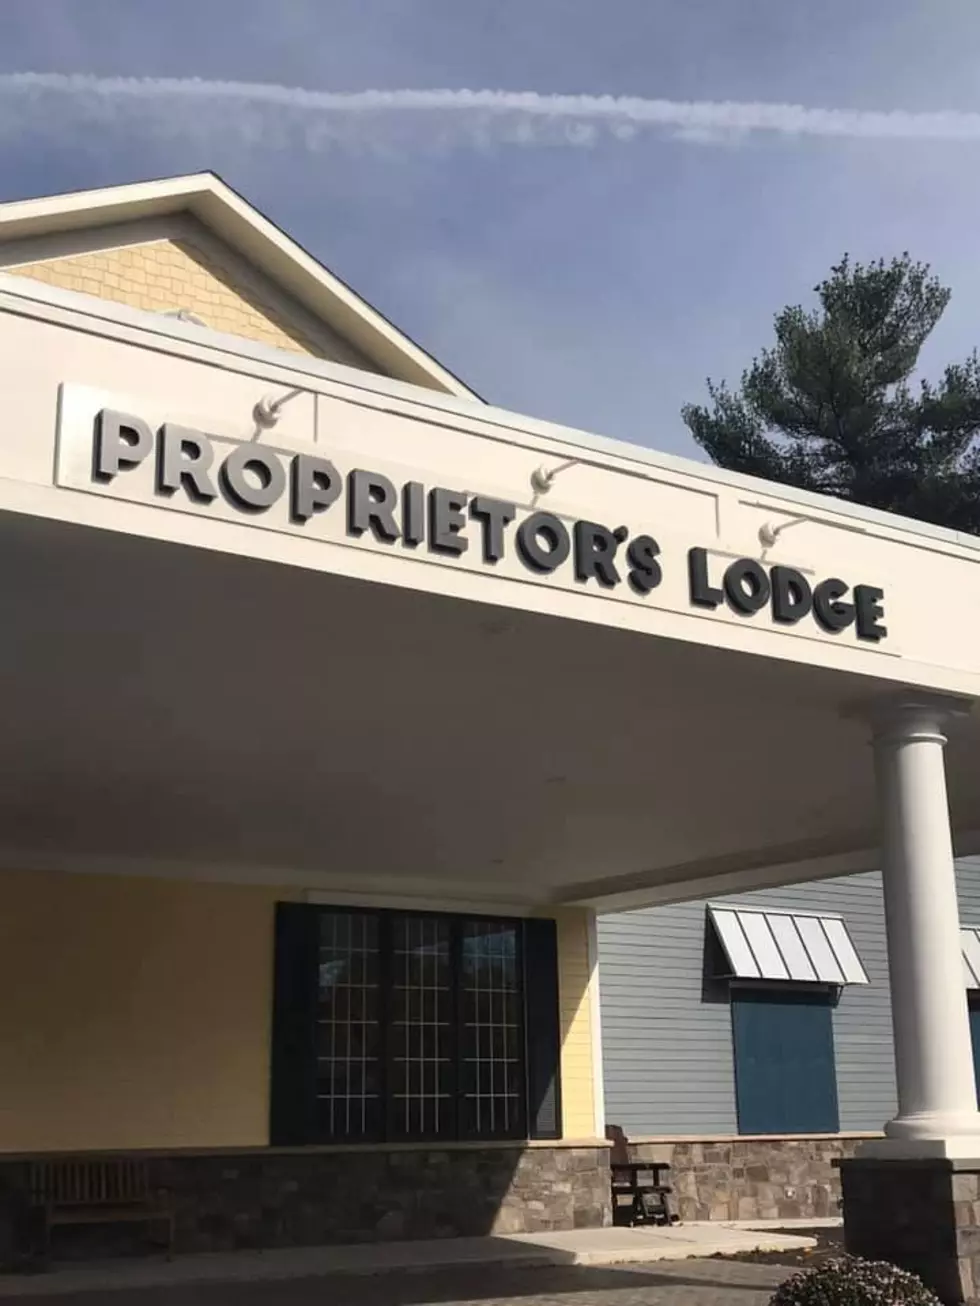 Proprietor&#8217;s Lodge Hosts Wedding, Violates COVID-19 Regulations